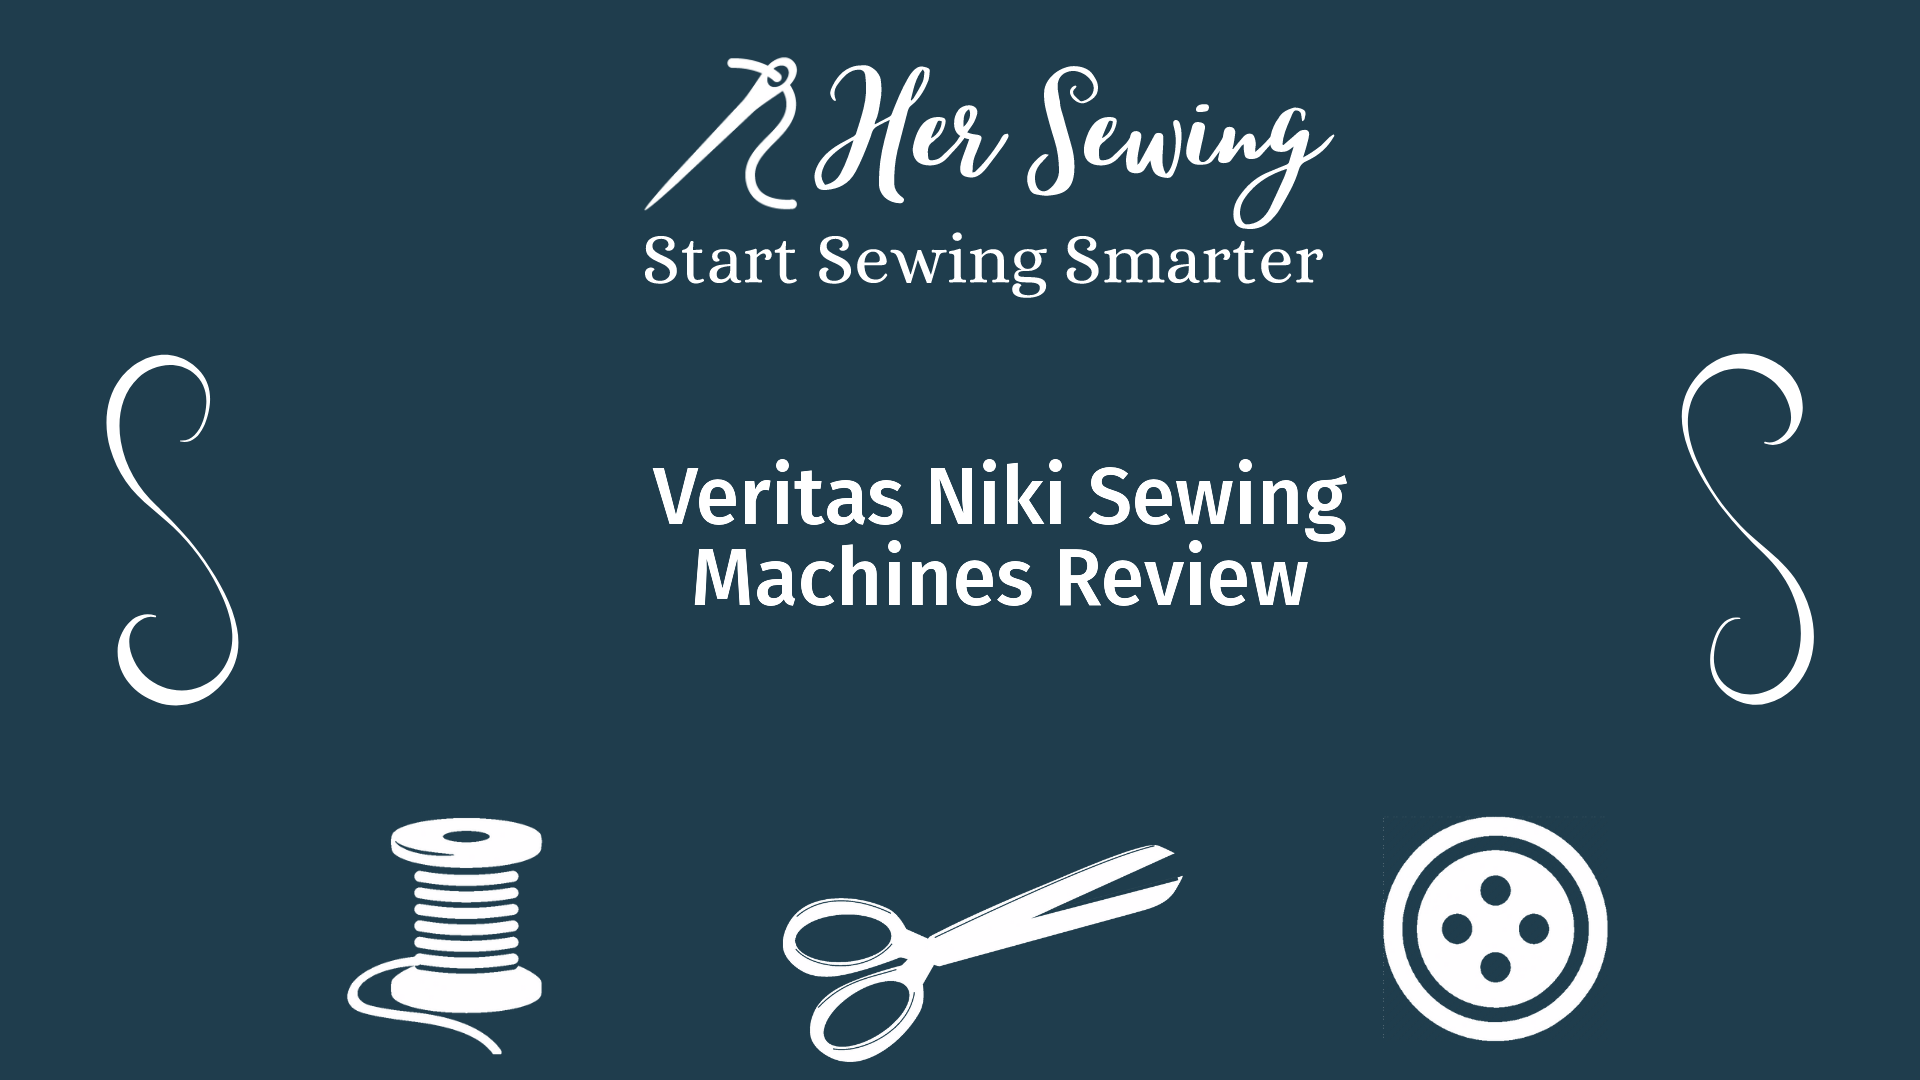 Veritas Niki Sewing Machines Review